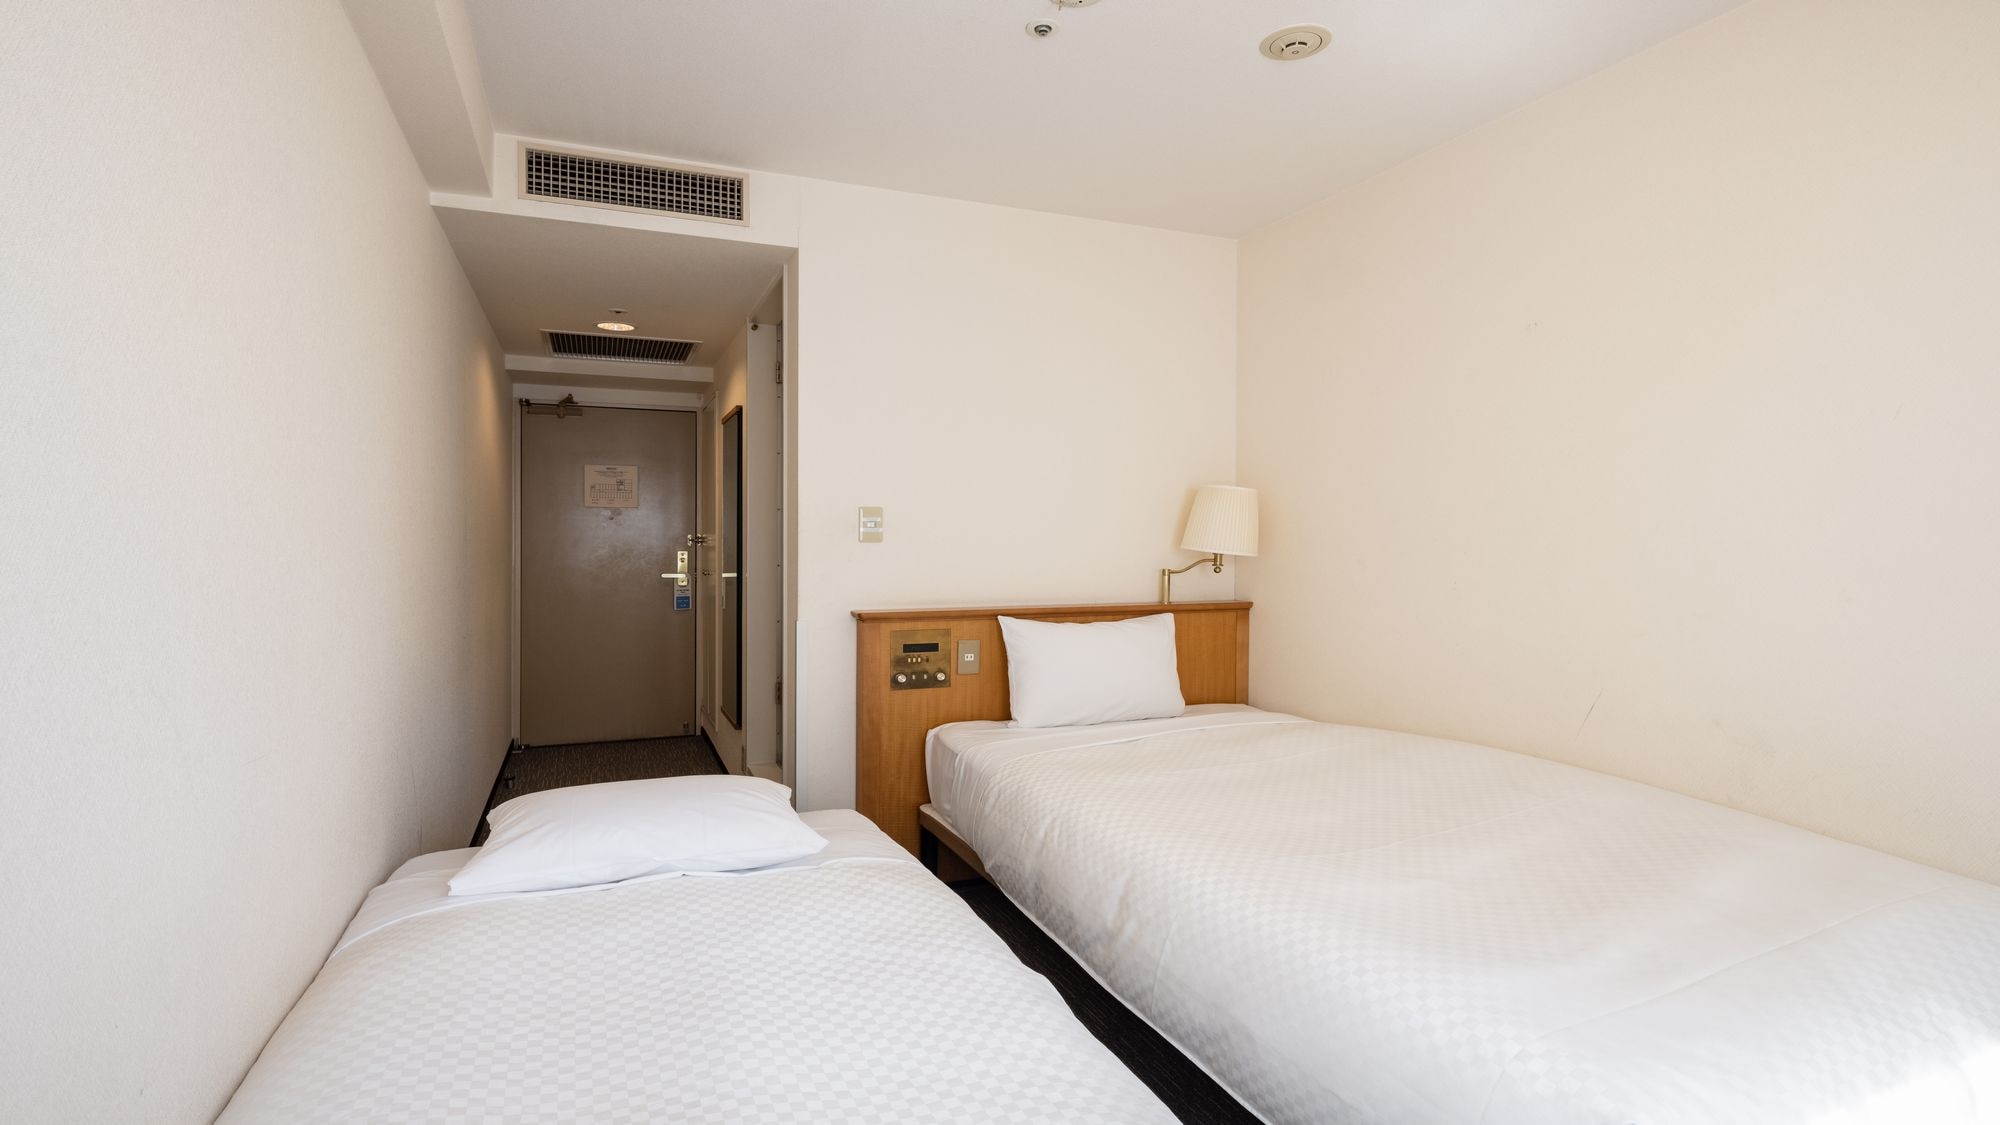 Kamar kasual twin room ukuran 15㎡, 2 single bed (lebar 110cm & lebar 90cm)